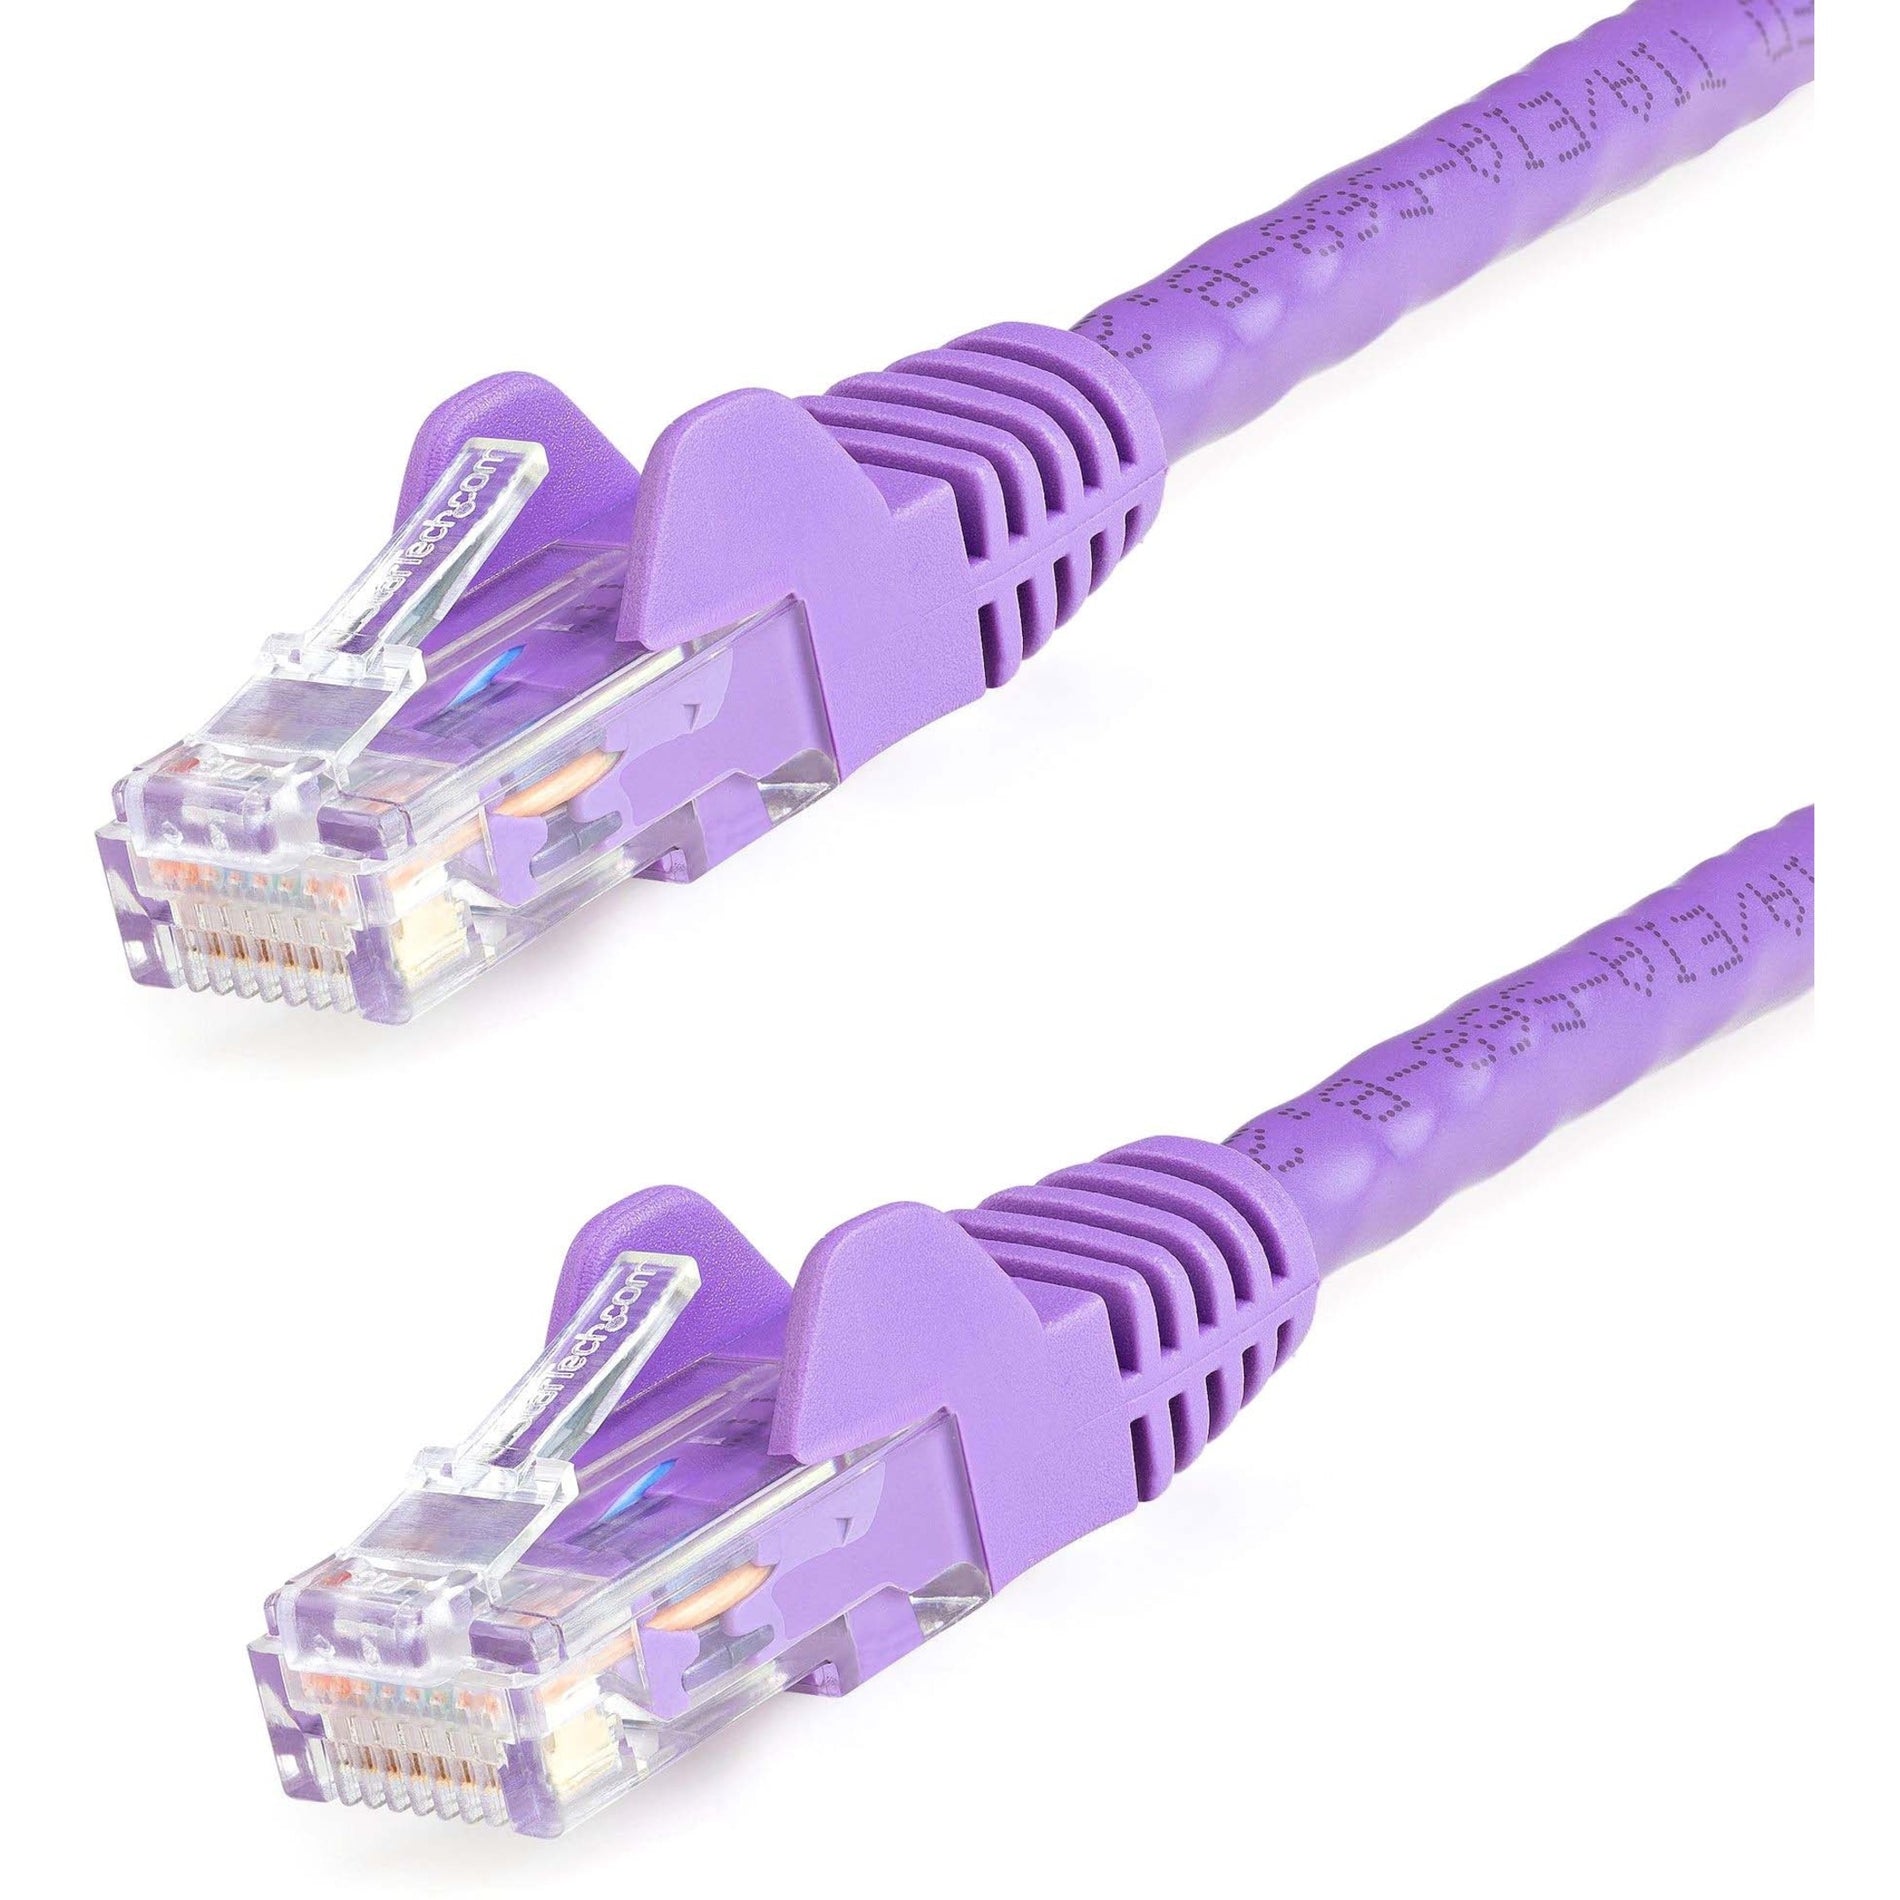 StarTech.com N6PATCH3PL 3 ft Purple Snagless Cat6 UTP Patch Cable, Lifetime Warranty, 10 Gbit/s Data Transfer Rate